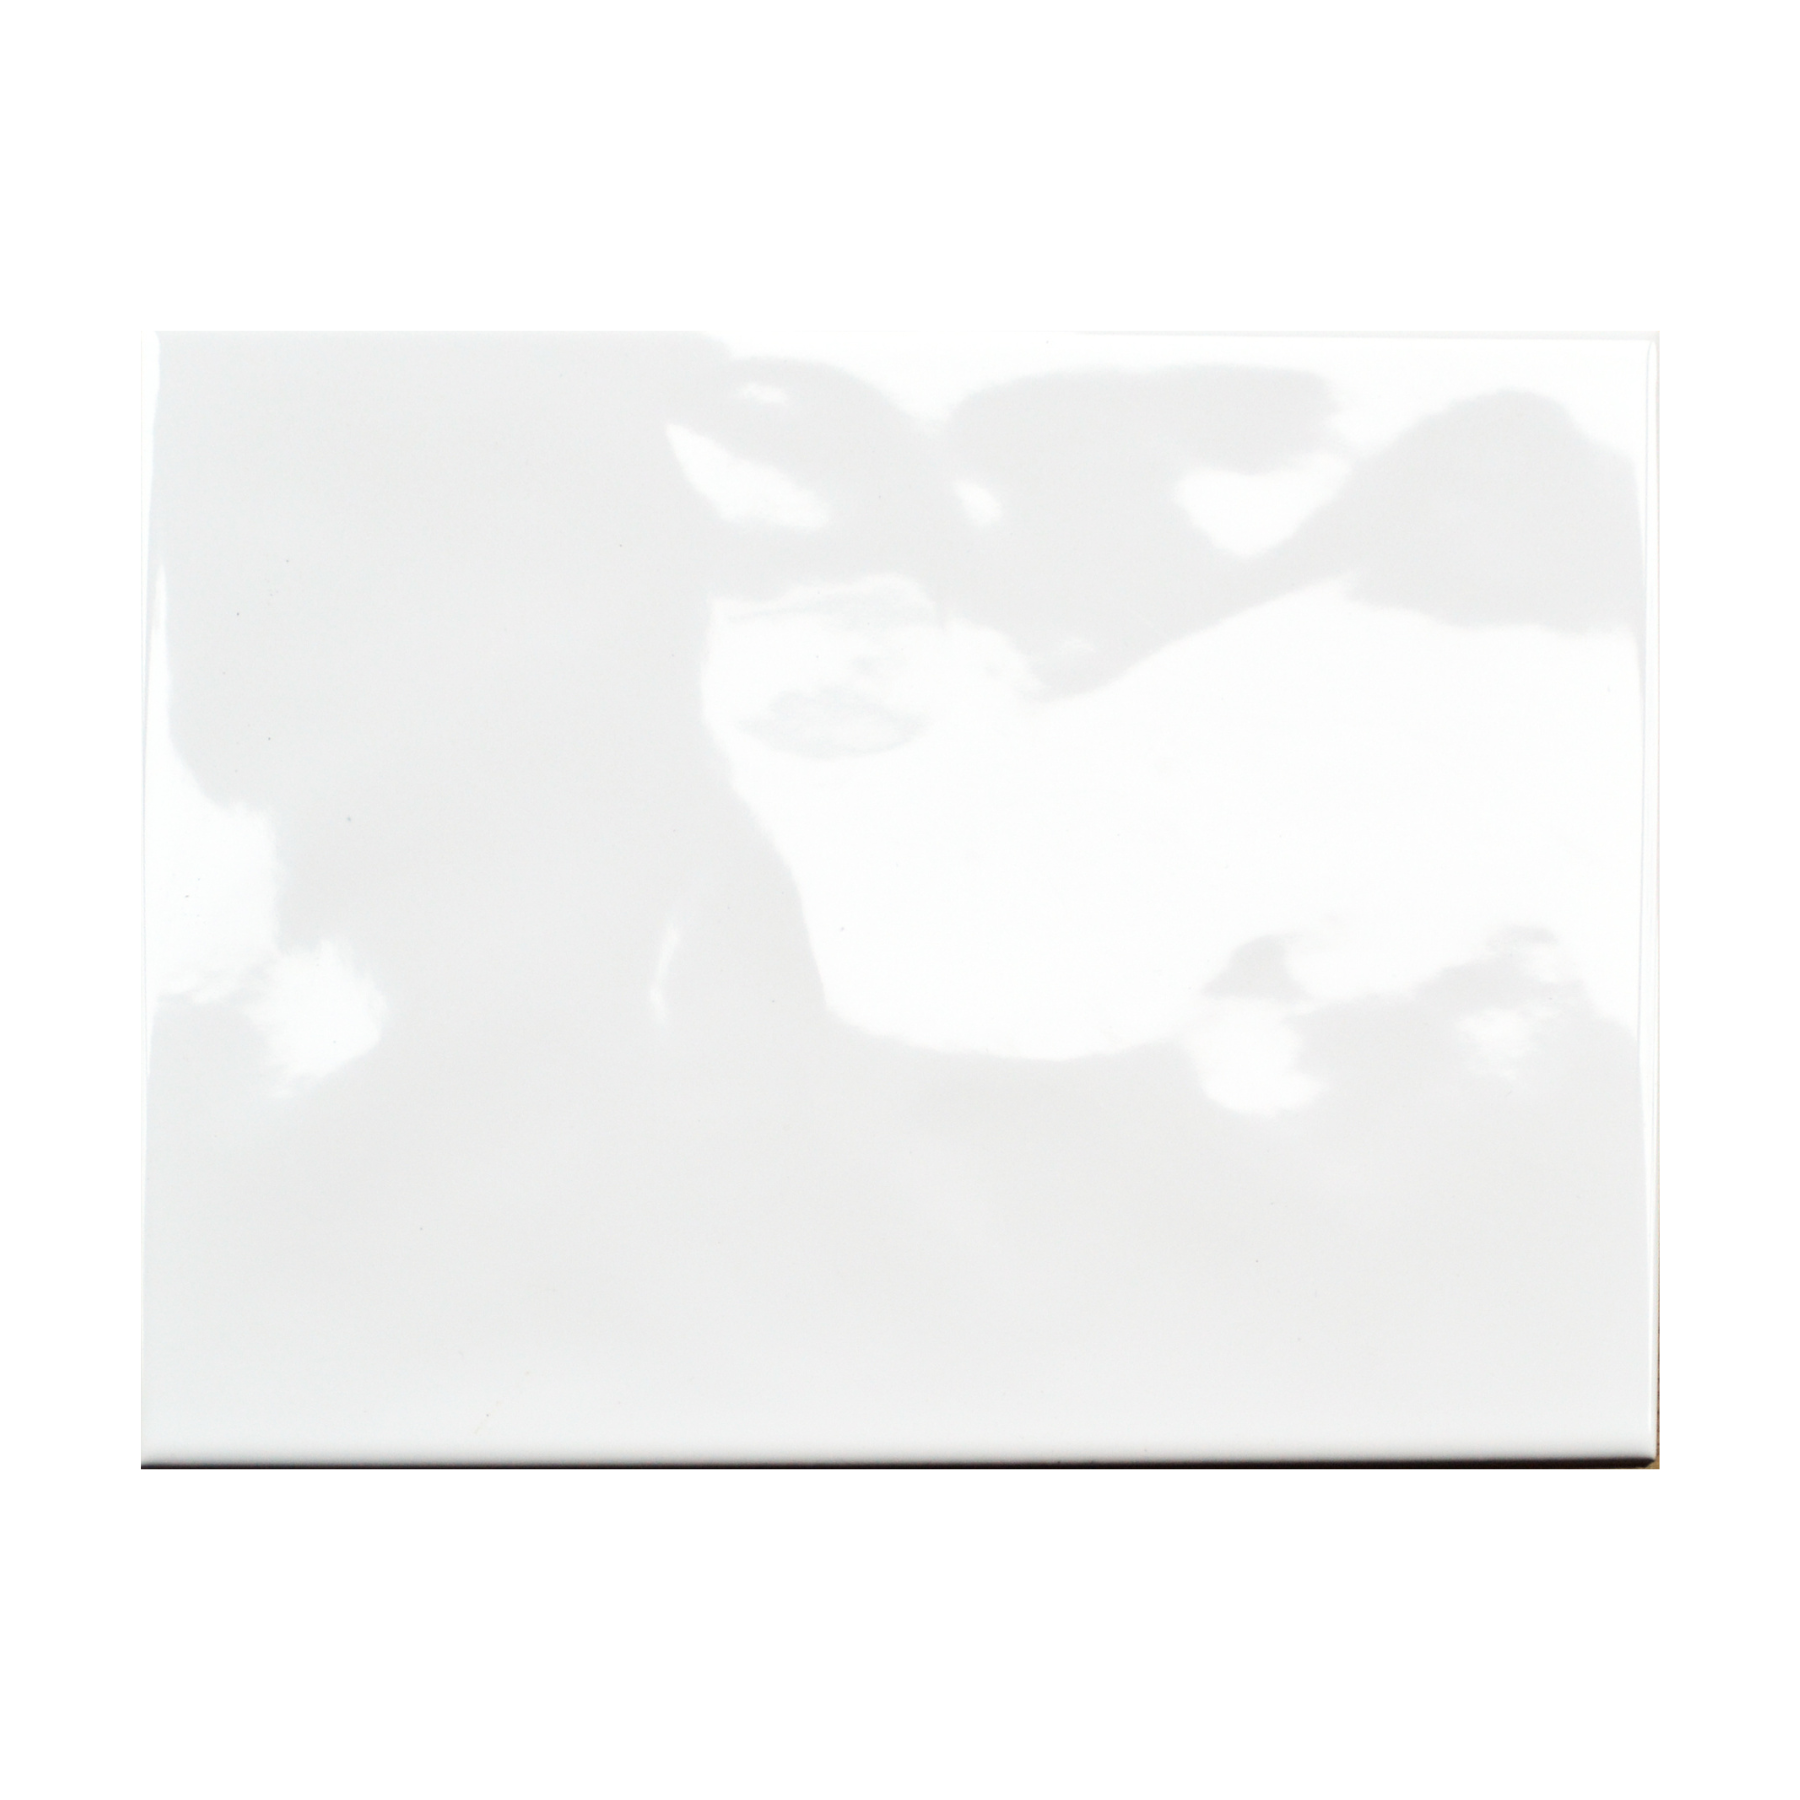 Kai Bumpy White Ceramic Gloss 20x25cm